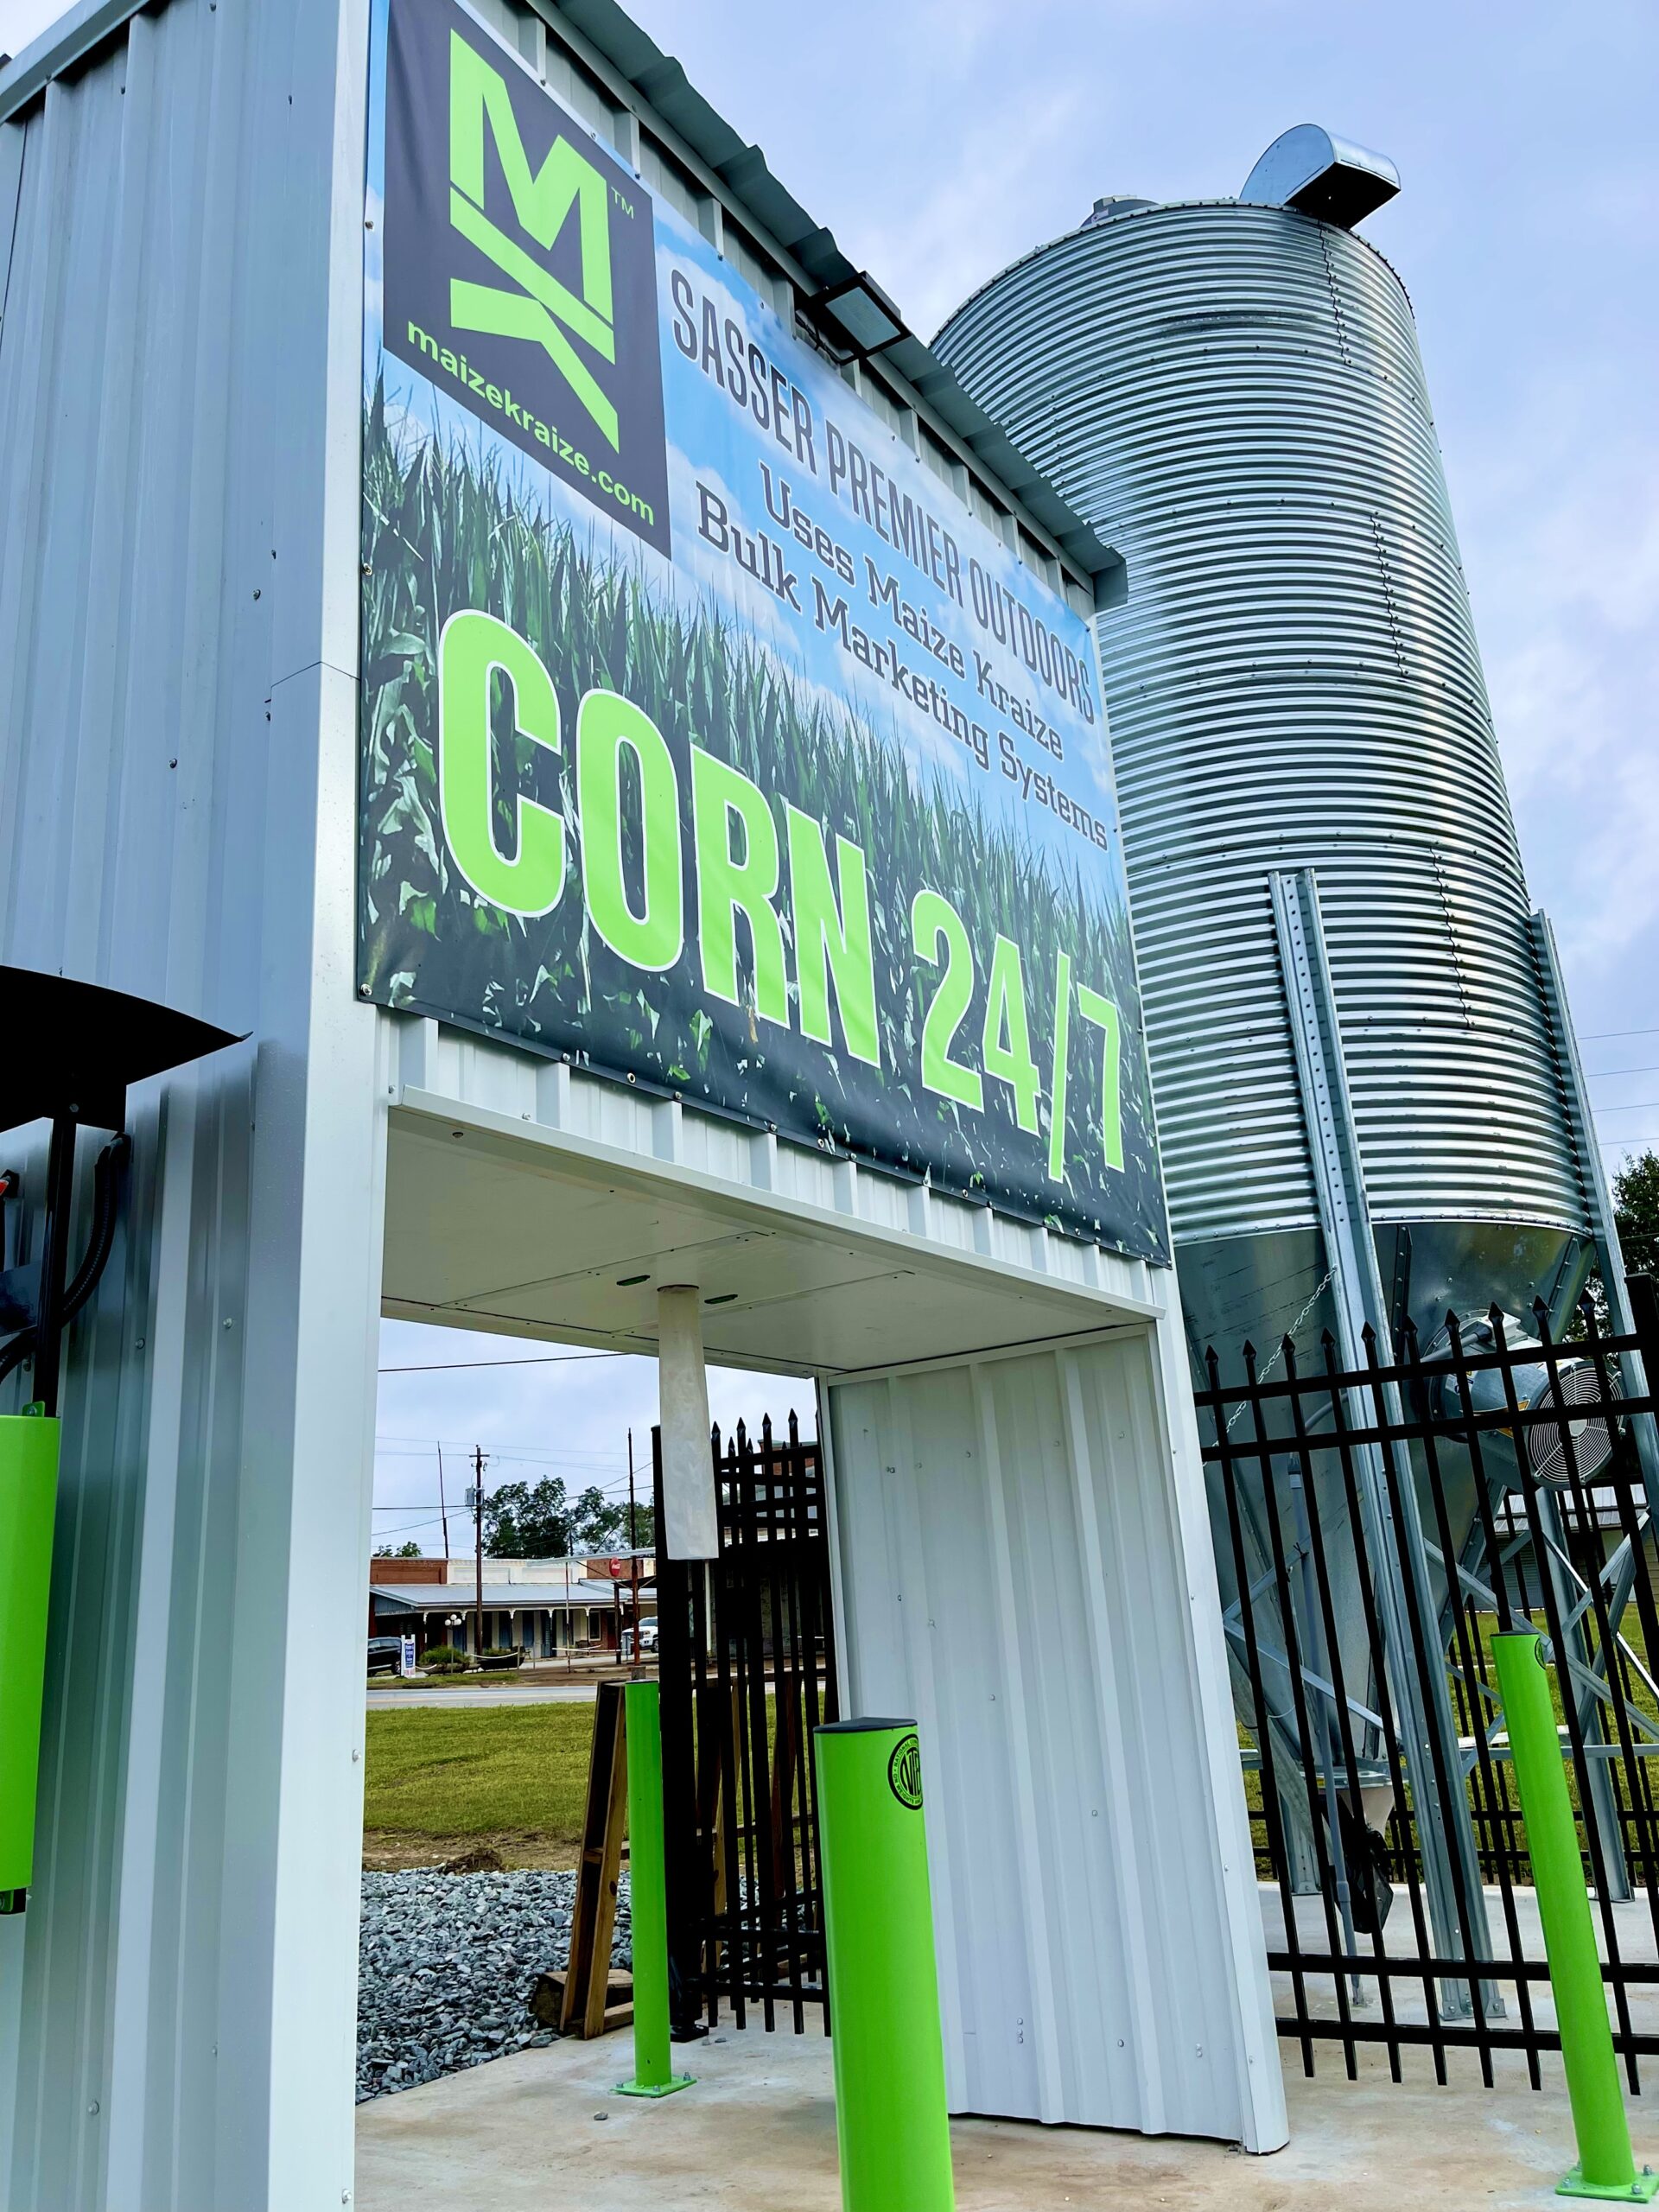 Maize Kraize corn vending machine dispensing corn